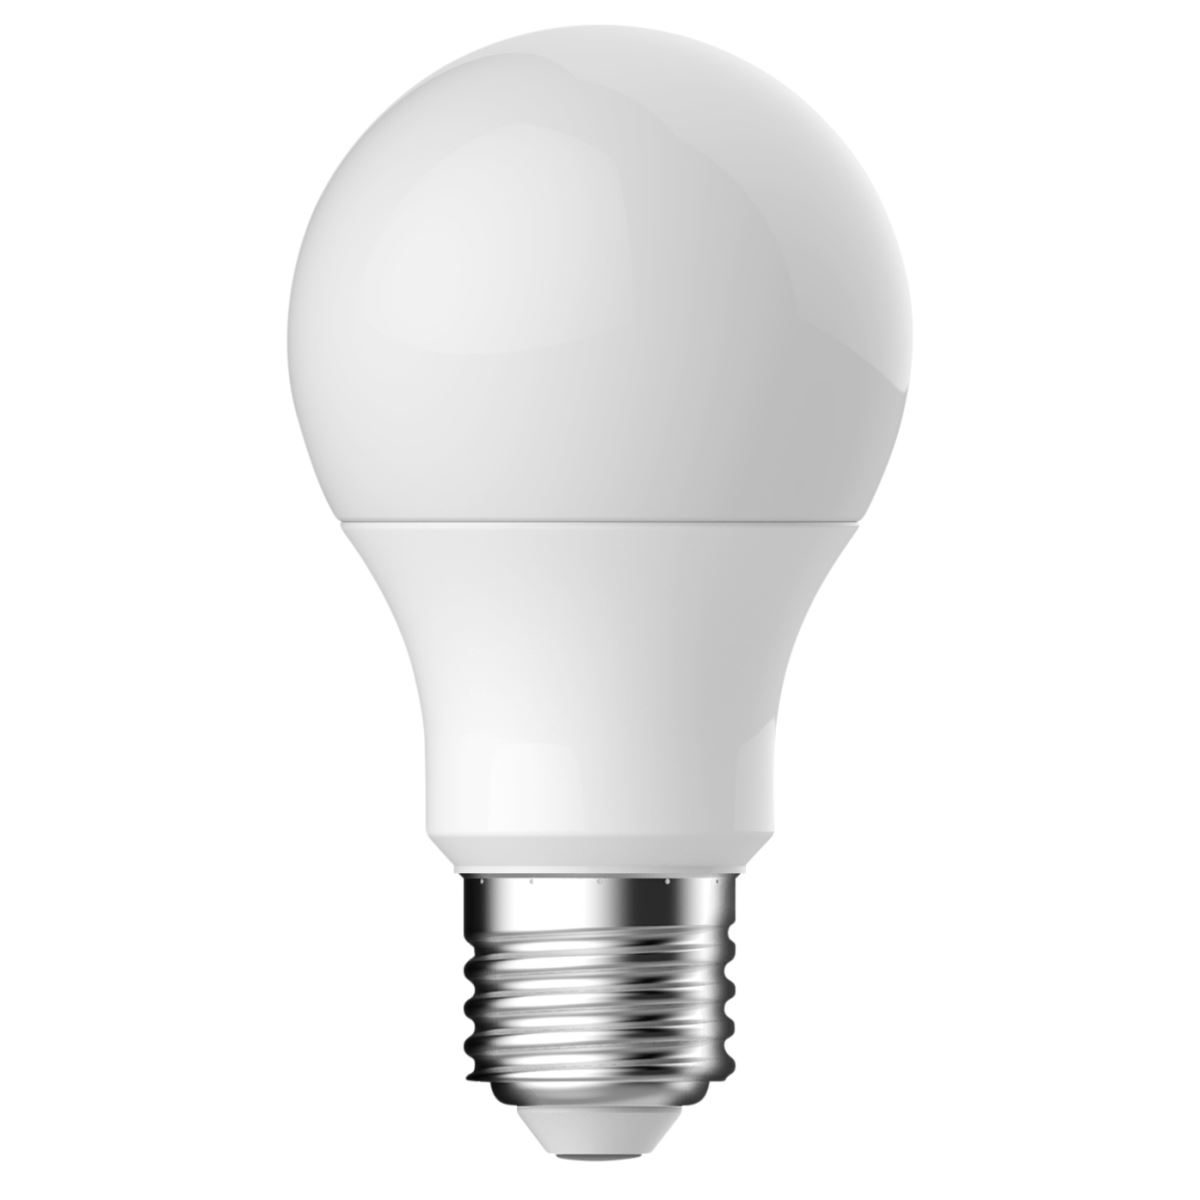 Nordlux Energetic LED Leuchtmittel E27 A60 weiß 1055lm 2700K 9,6W 80Ra 240° 6x6x10,9cm von Energetic